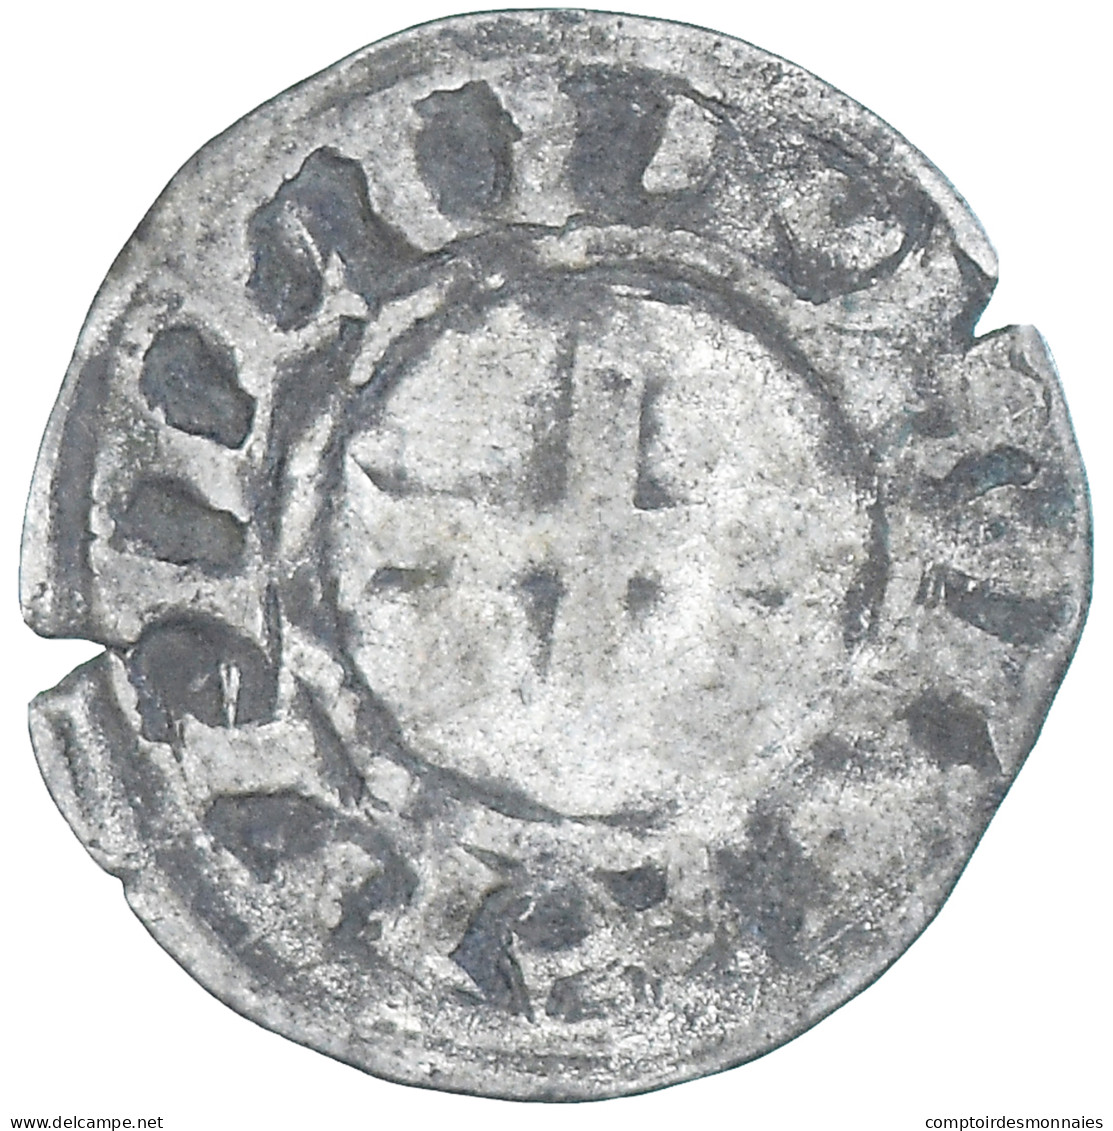 Monnaie, France, Philippe II, Denier Tournois, 1180-1223, Saint-Martin De Tours - 1180-1223 Philippe II Auguste